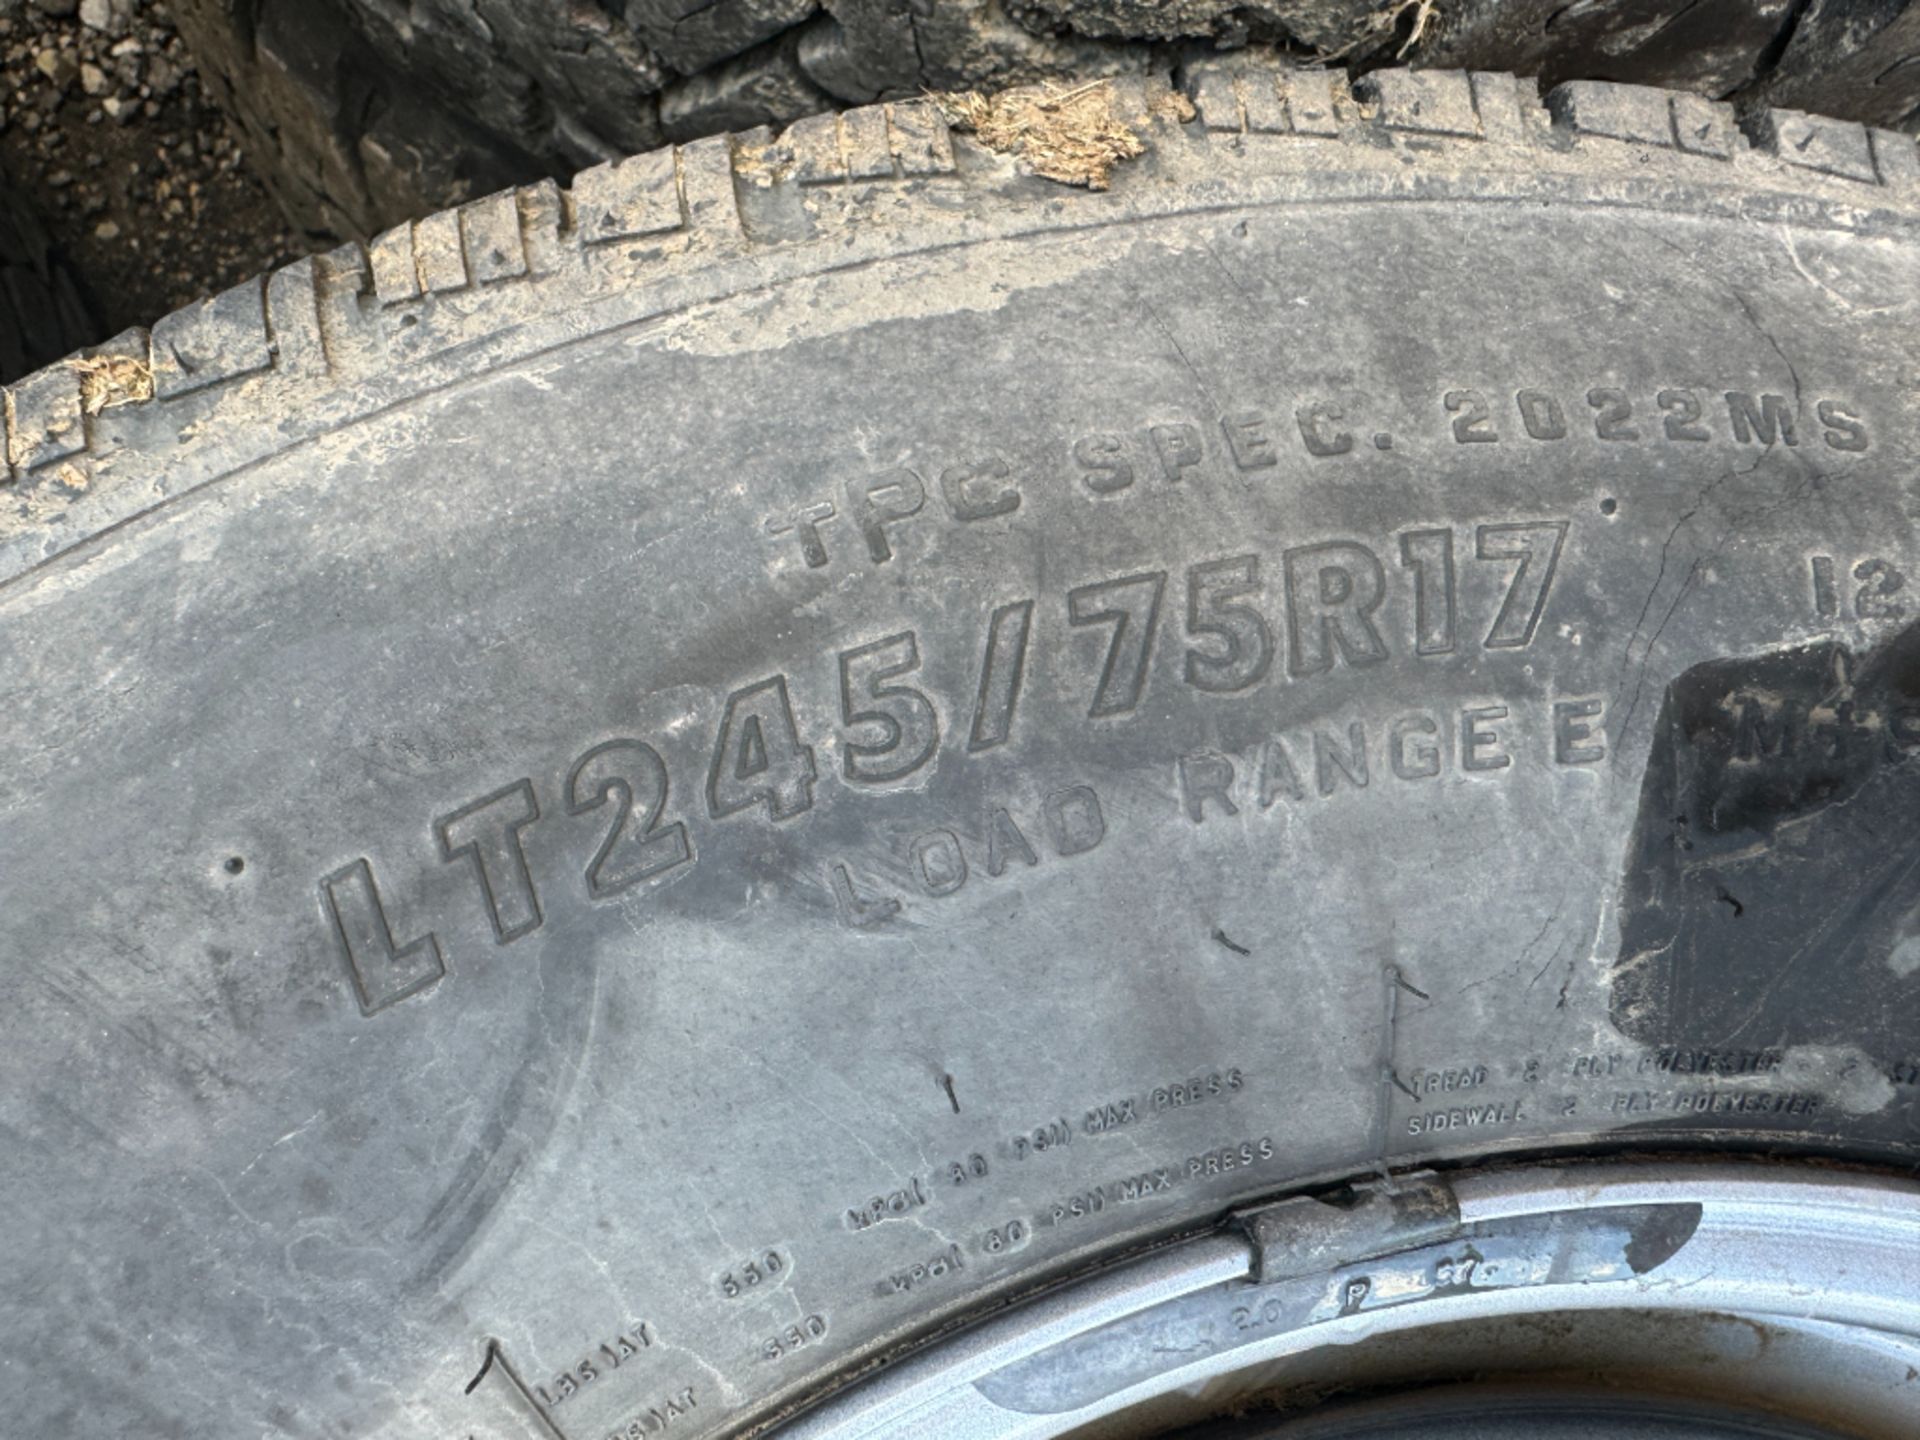 2 Firestone Transforce HT LT245/75R17 Tires - Image 3 of 3